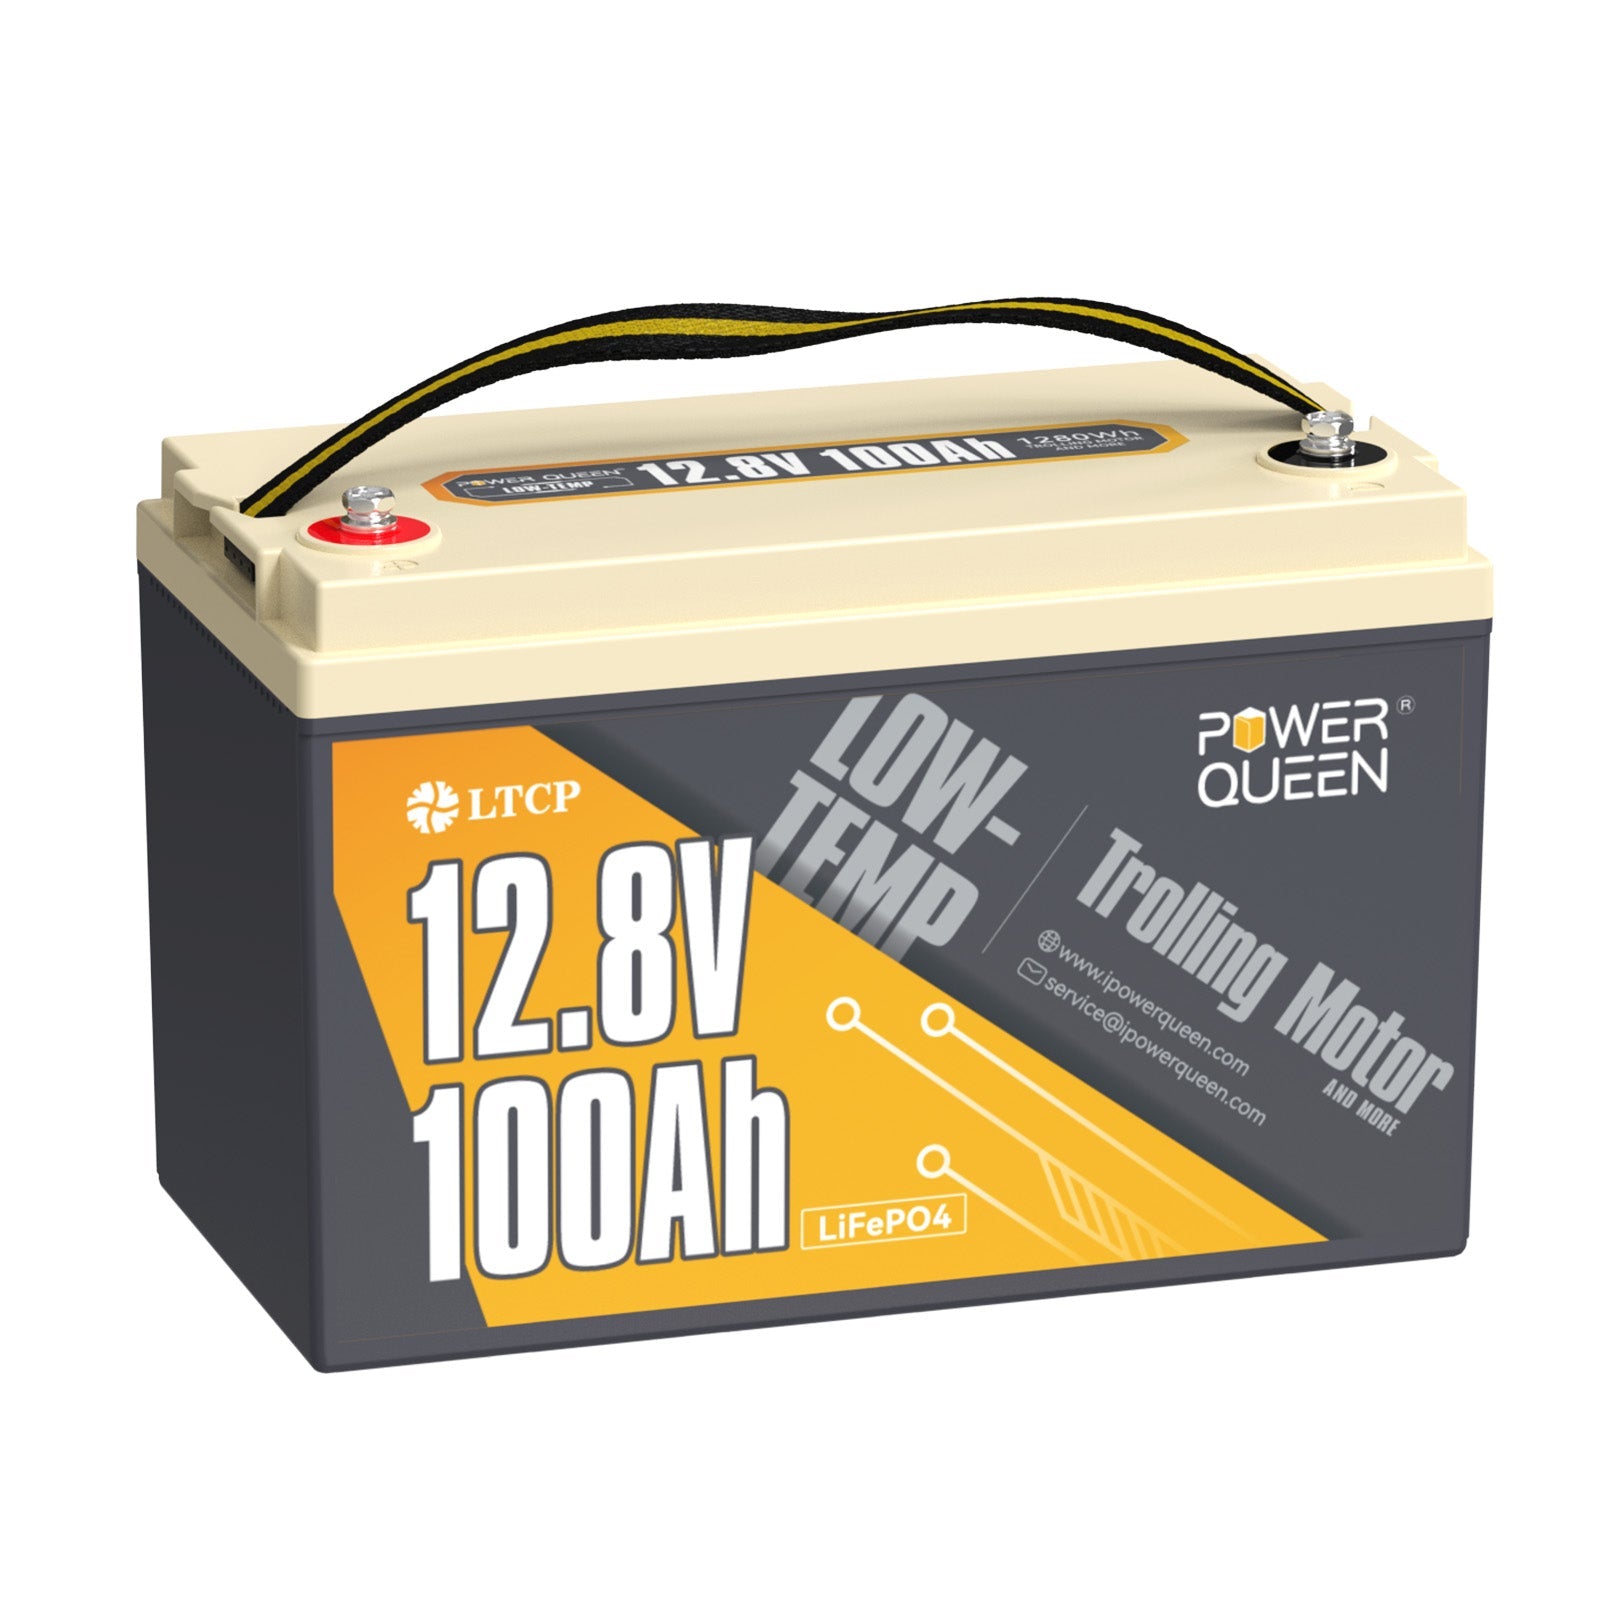 【0% VAT】Power Queen 12.8V 100Ah low temp LiFePO4 battery, 100A BMS for trolling motor